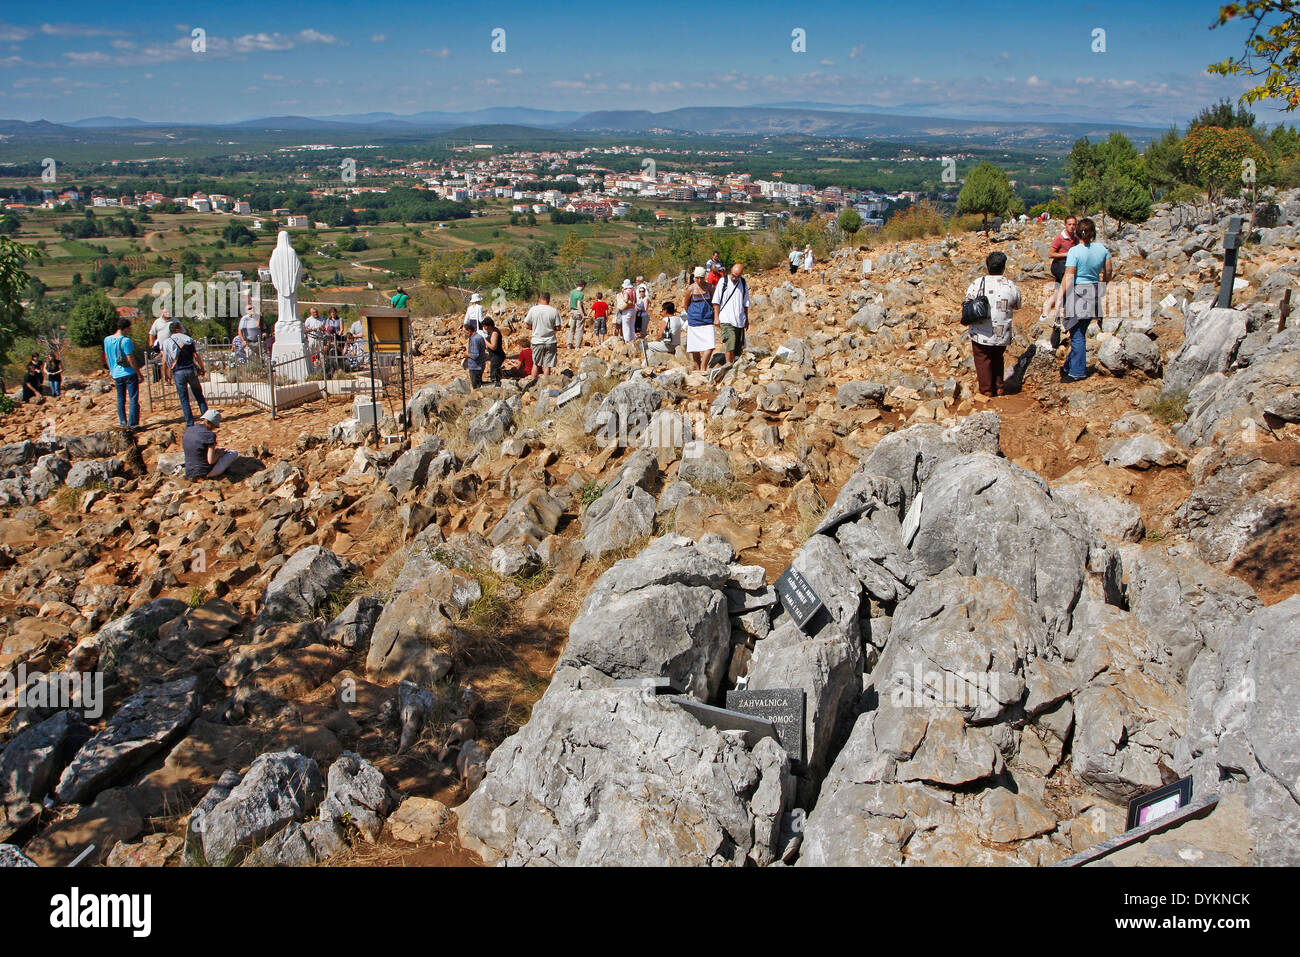 MEDJUGORJE, Bosnien und Herzegowina - 8. SEPTEMBER: Hügel der Erscheinungen der Jungfrau Maria am 8. September 2009 in Medjugorje. Stockfoto